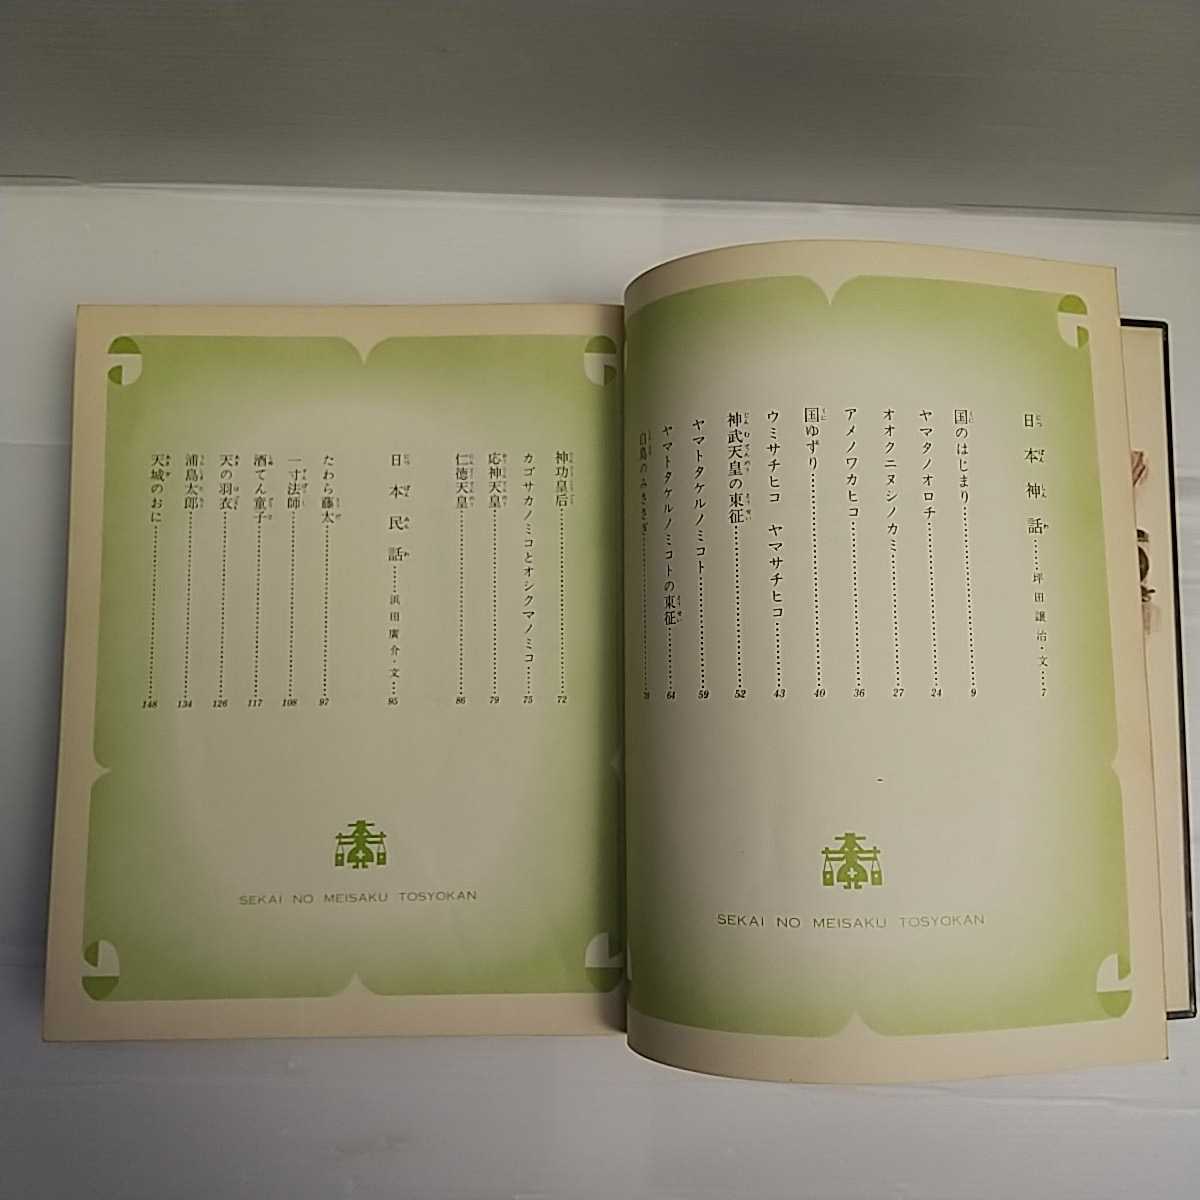 zaa-195♪世界の名作図書館〈3〉日本神話・日本民話・東洋民話　(昭和48年) 1973年